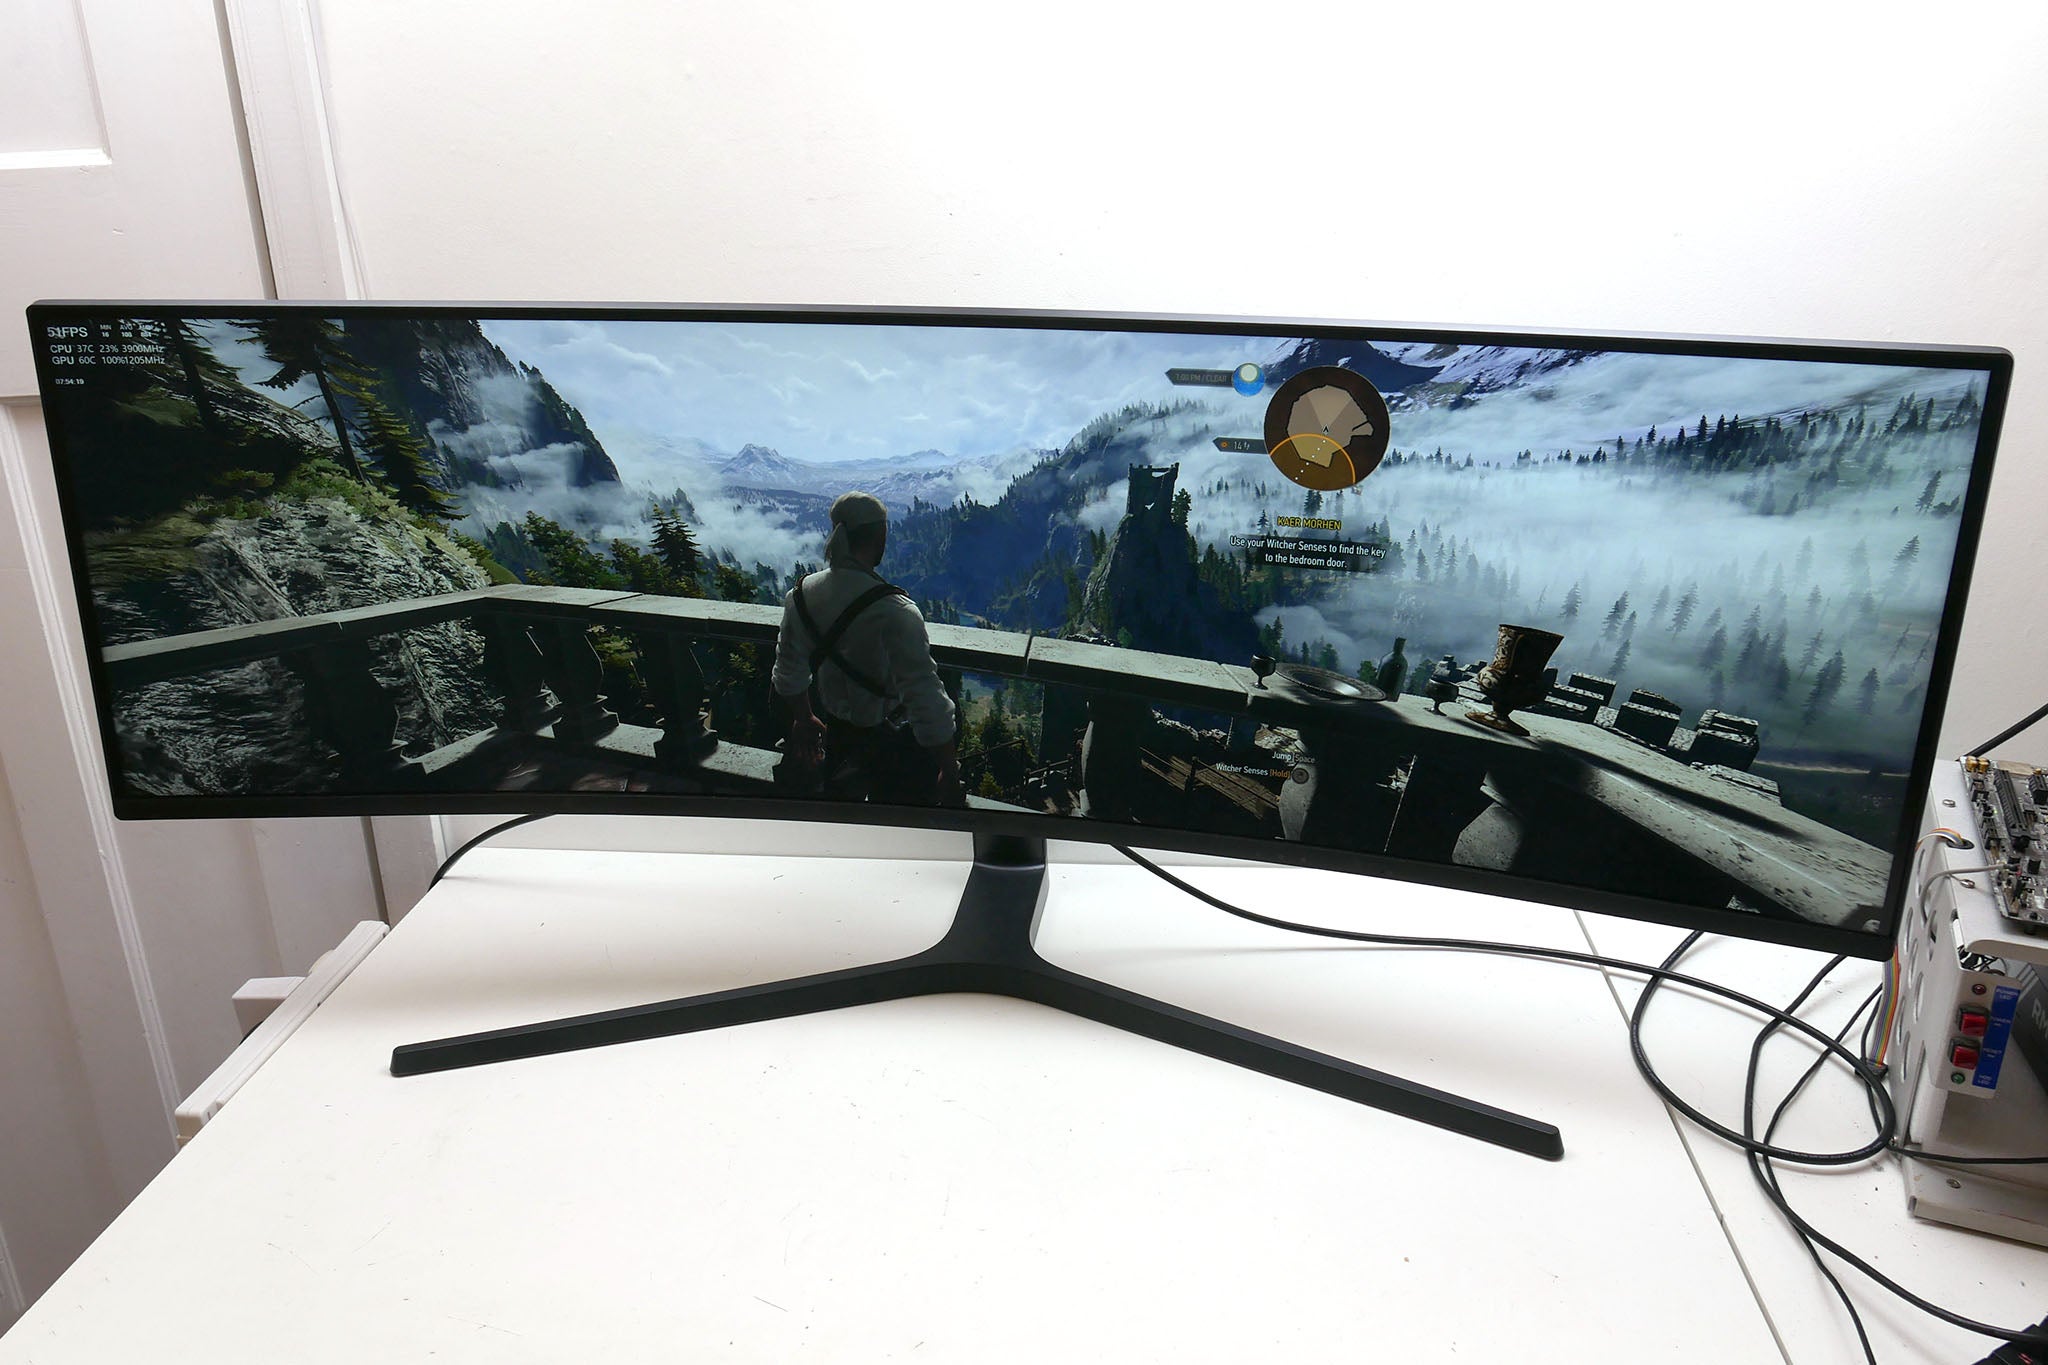 Samsung C49J89 monitor displaying a video game scene.